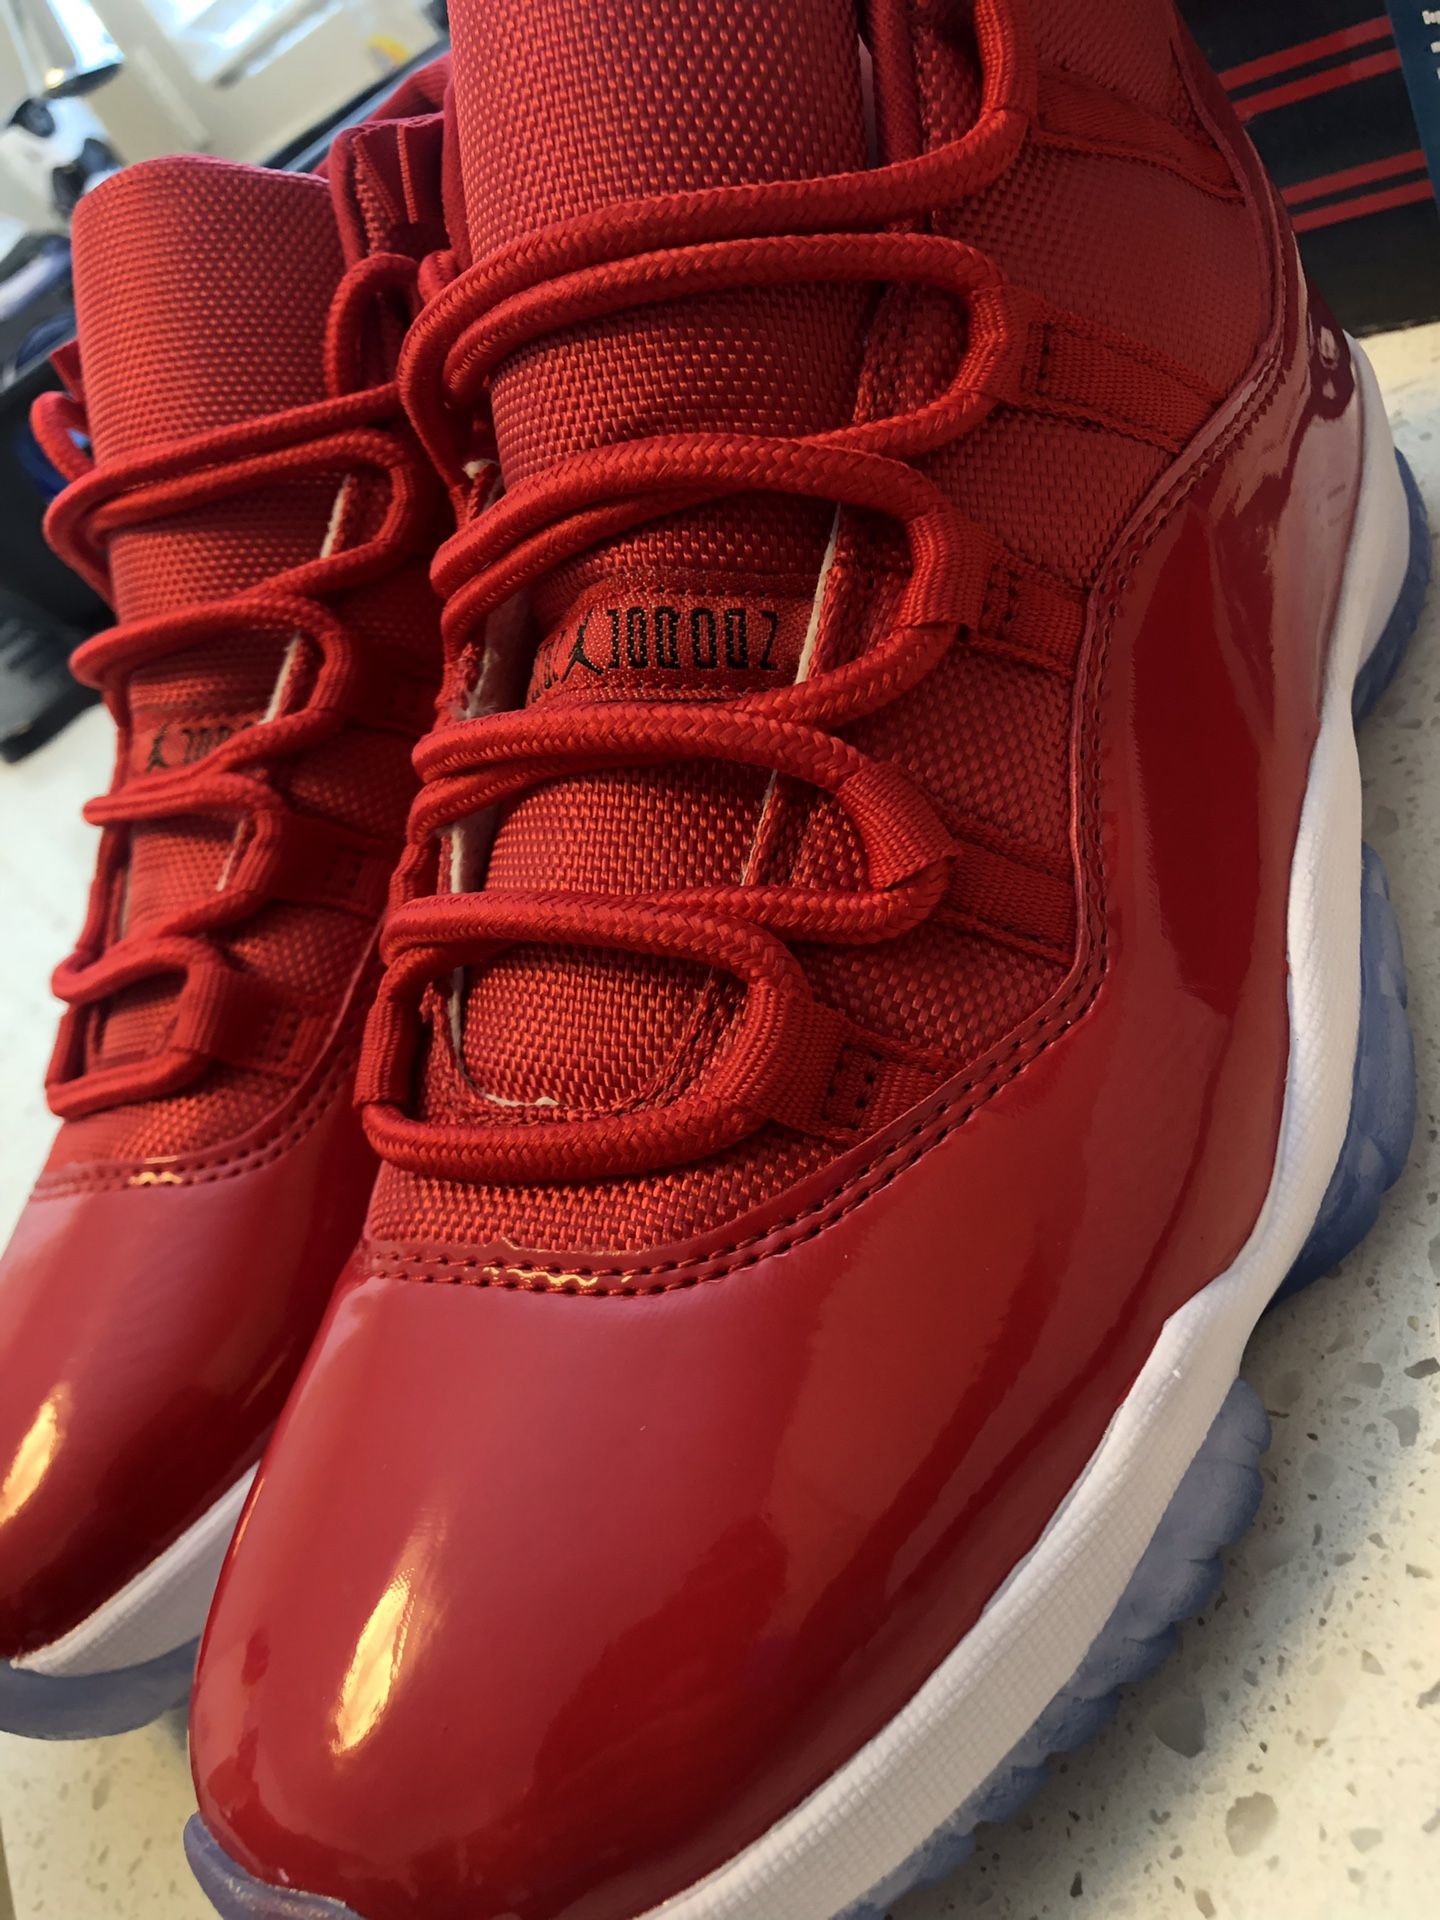 Red Retro Jordan 11 size 9.5 $190